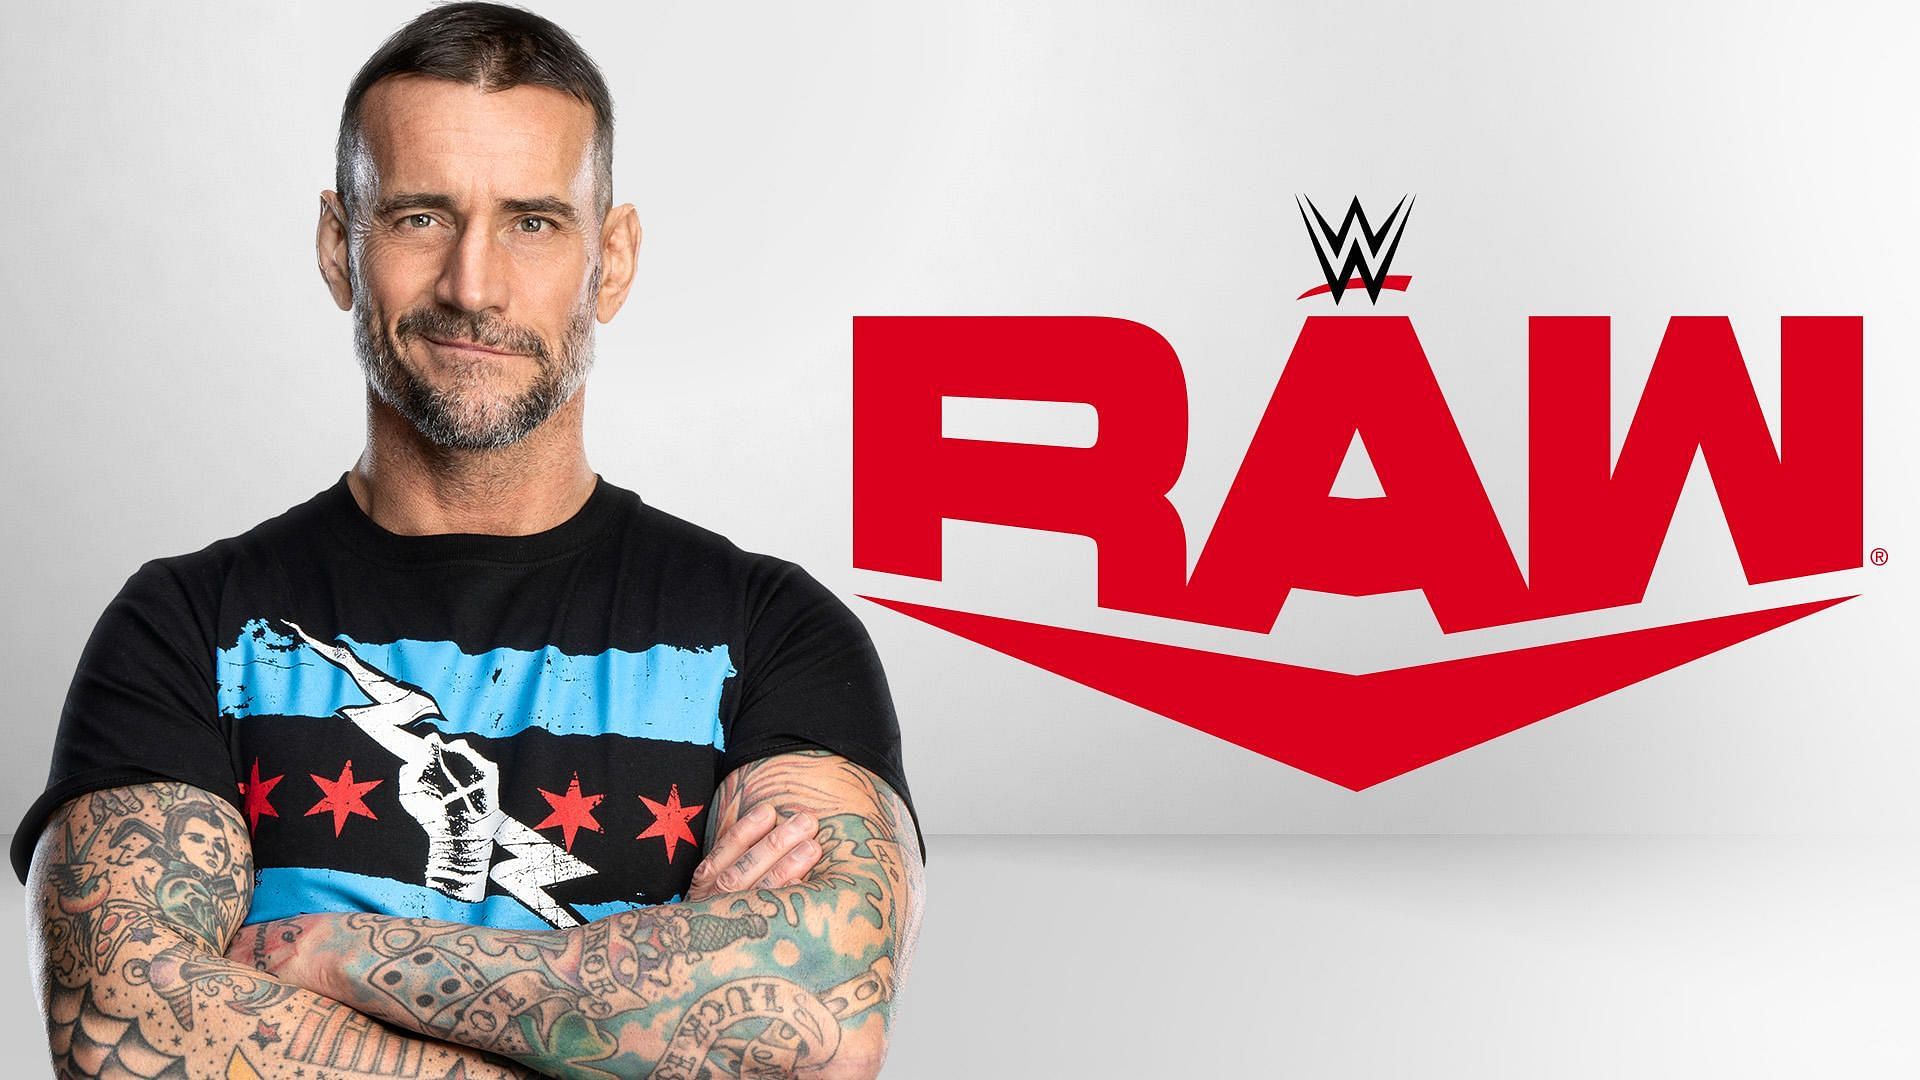 CM Punk poses next to the WWE RAW logo